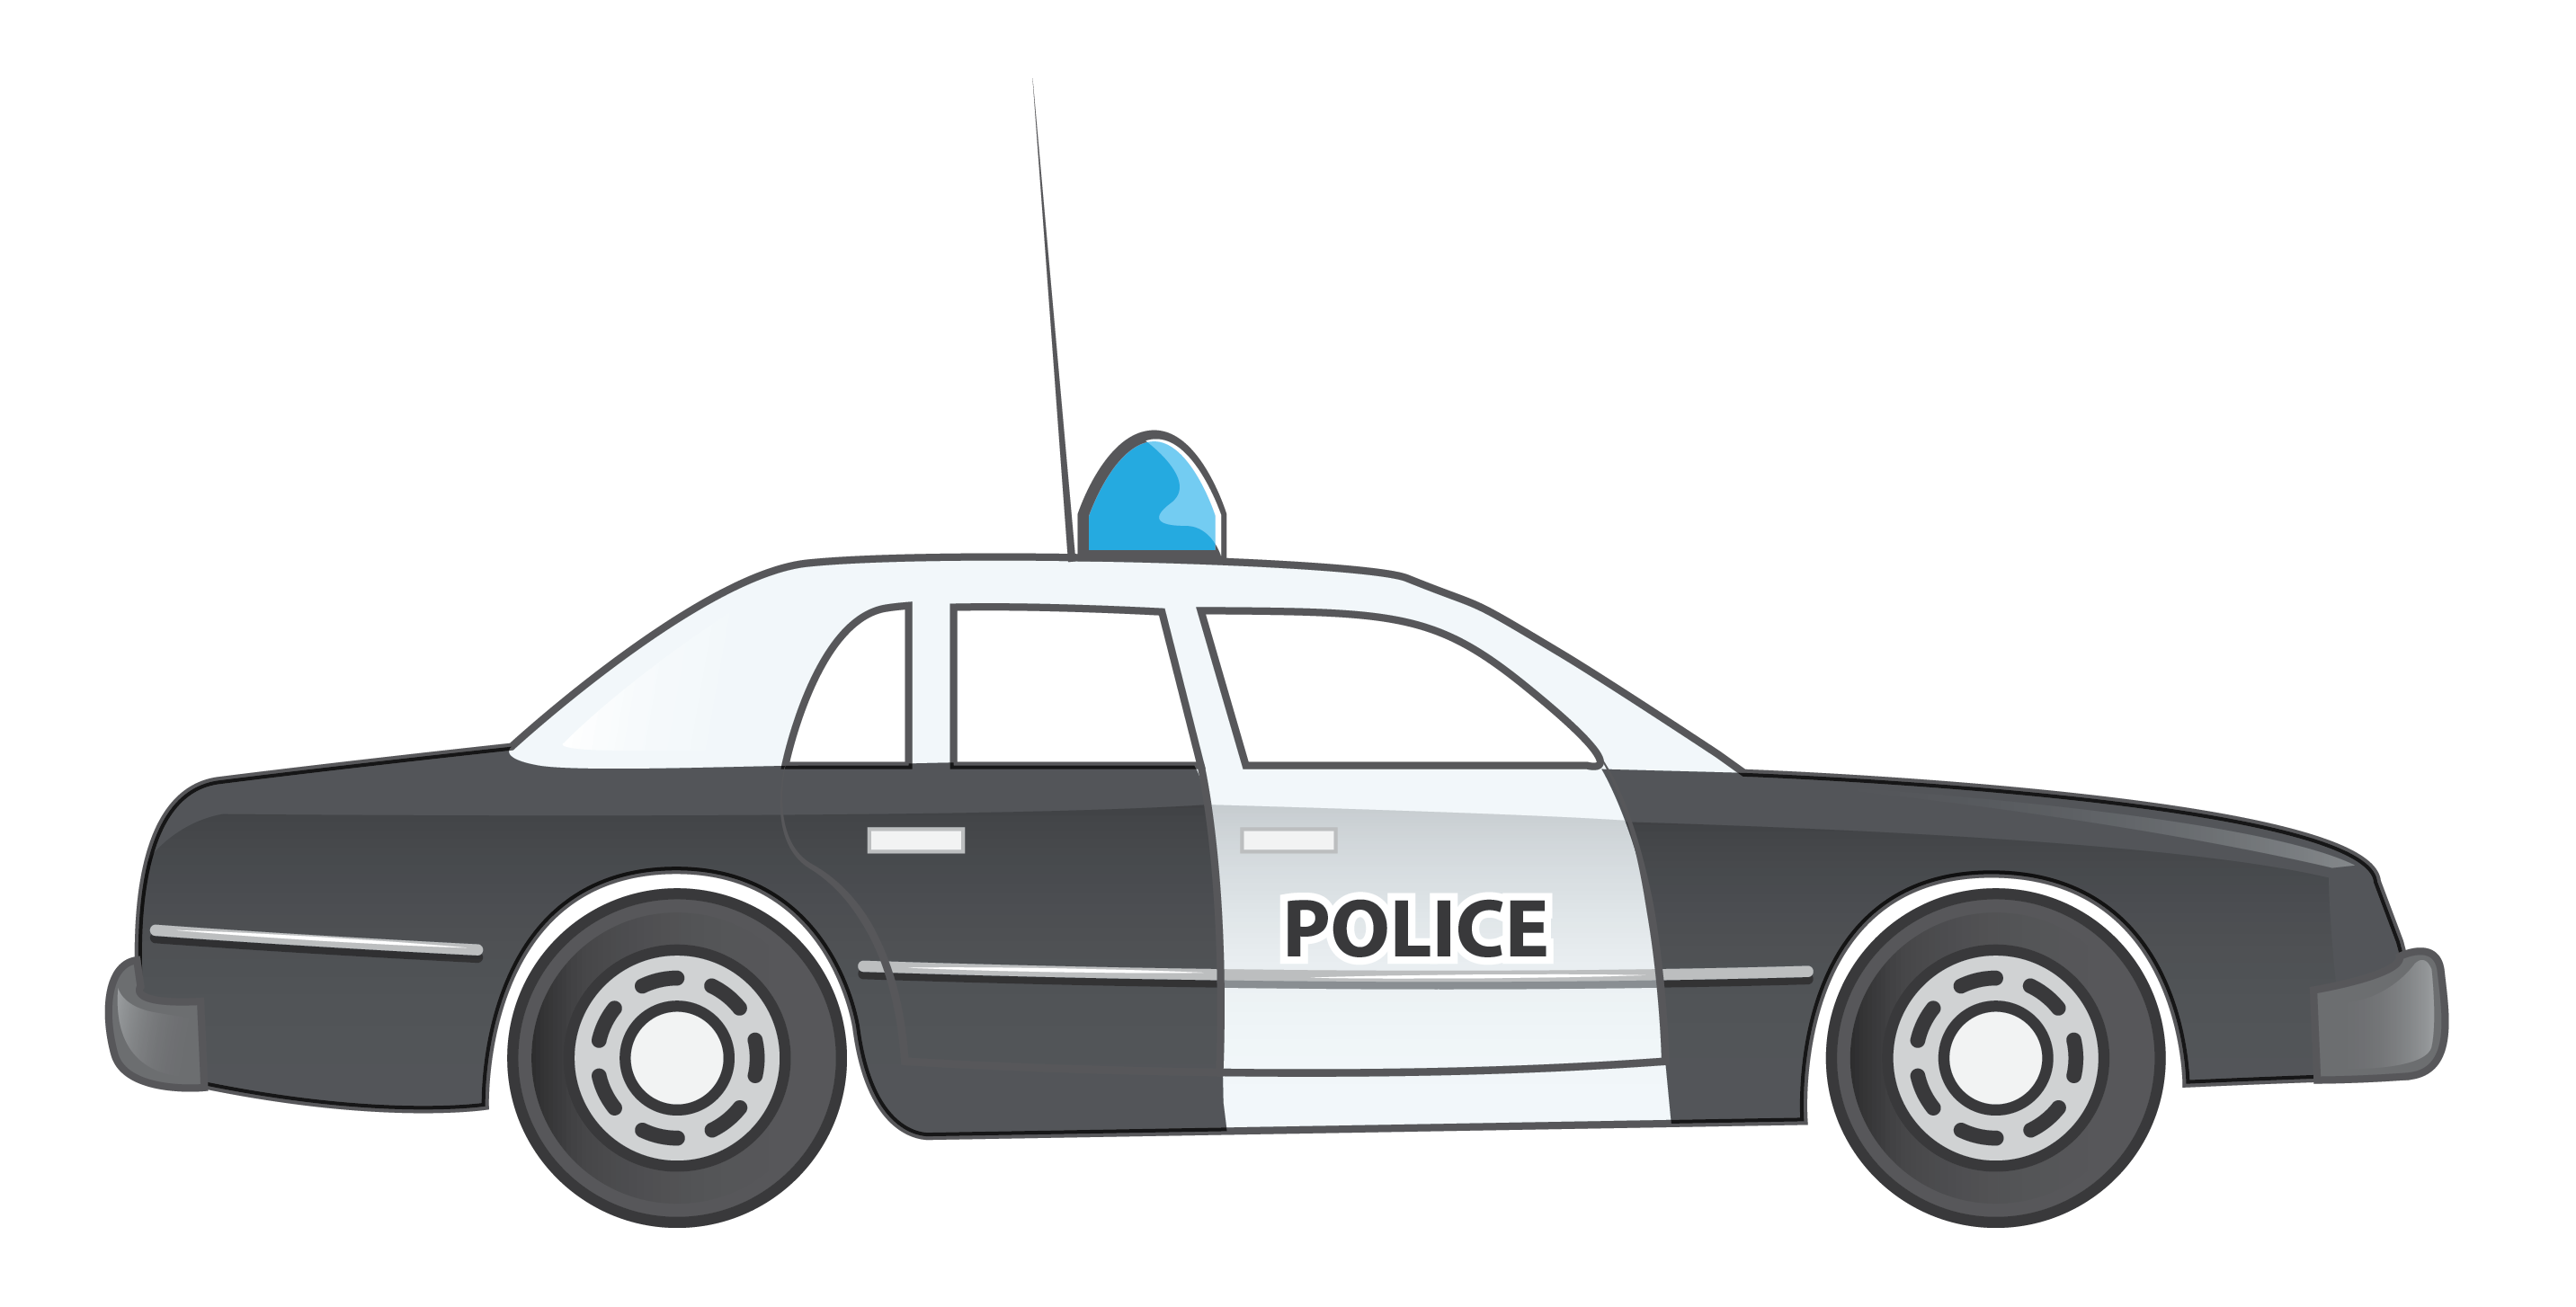 Police car free to use clipar - Clipart Police Car